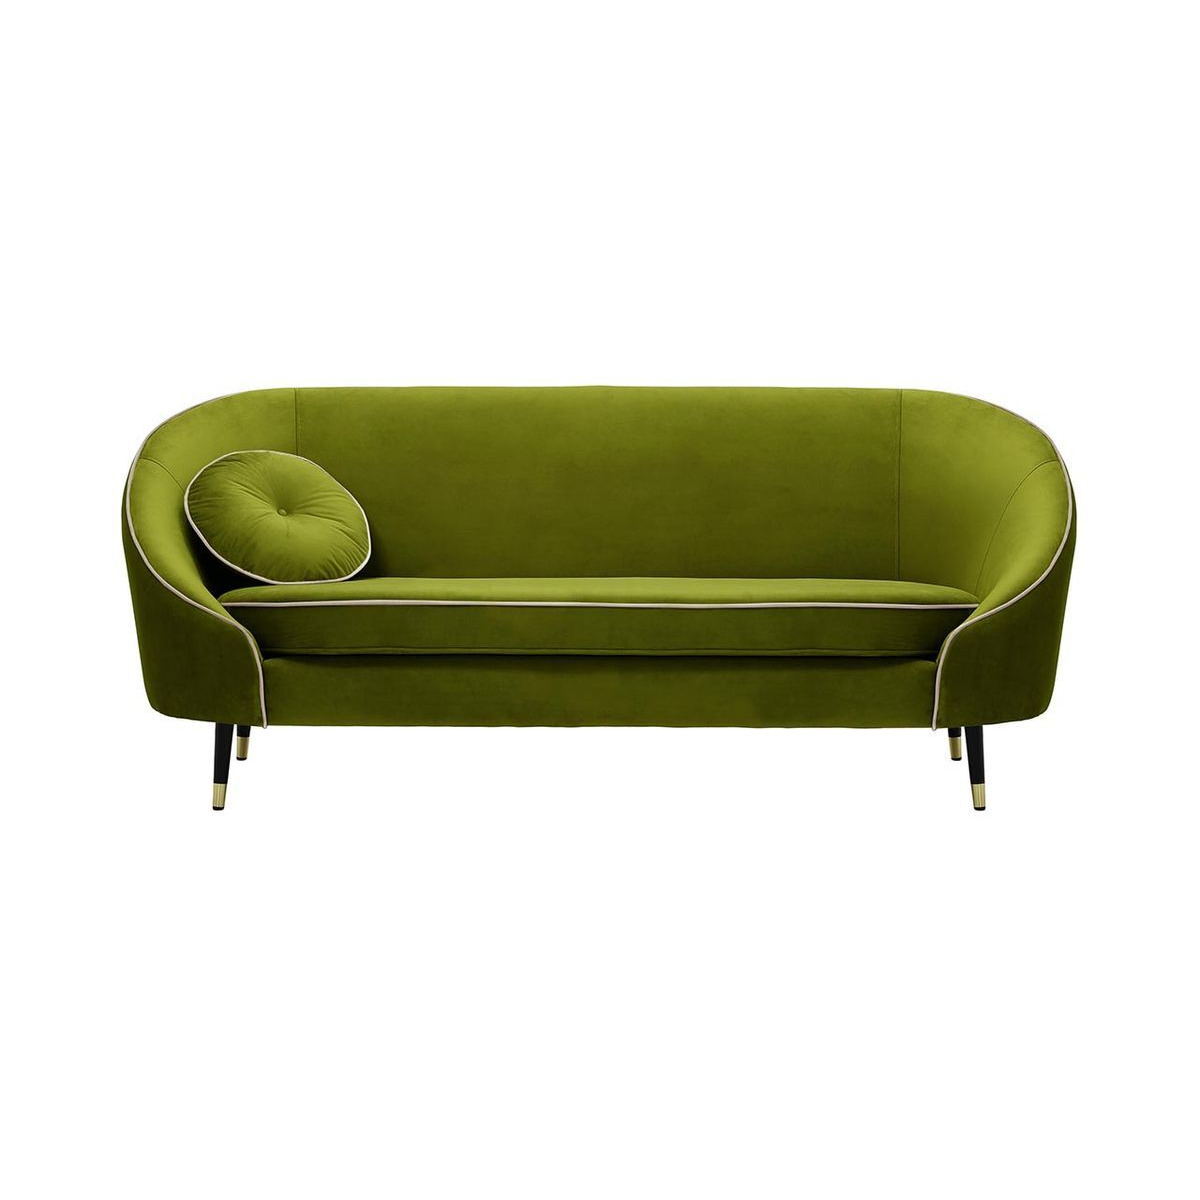 Kooper 3 Seater Sofa, olive green, Leg colour: Black + gold - image 1